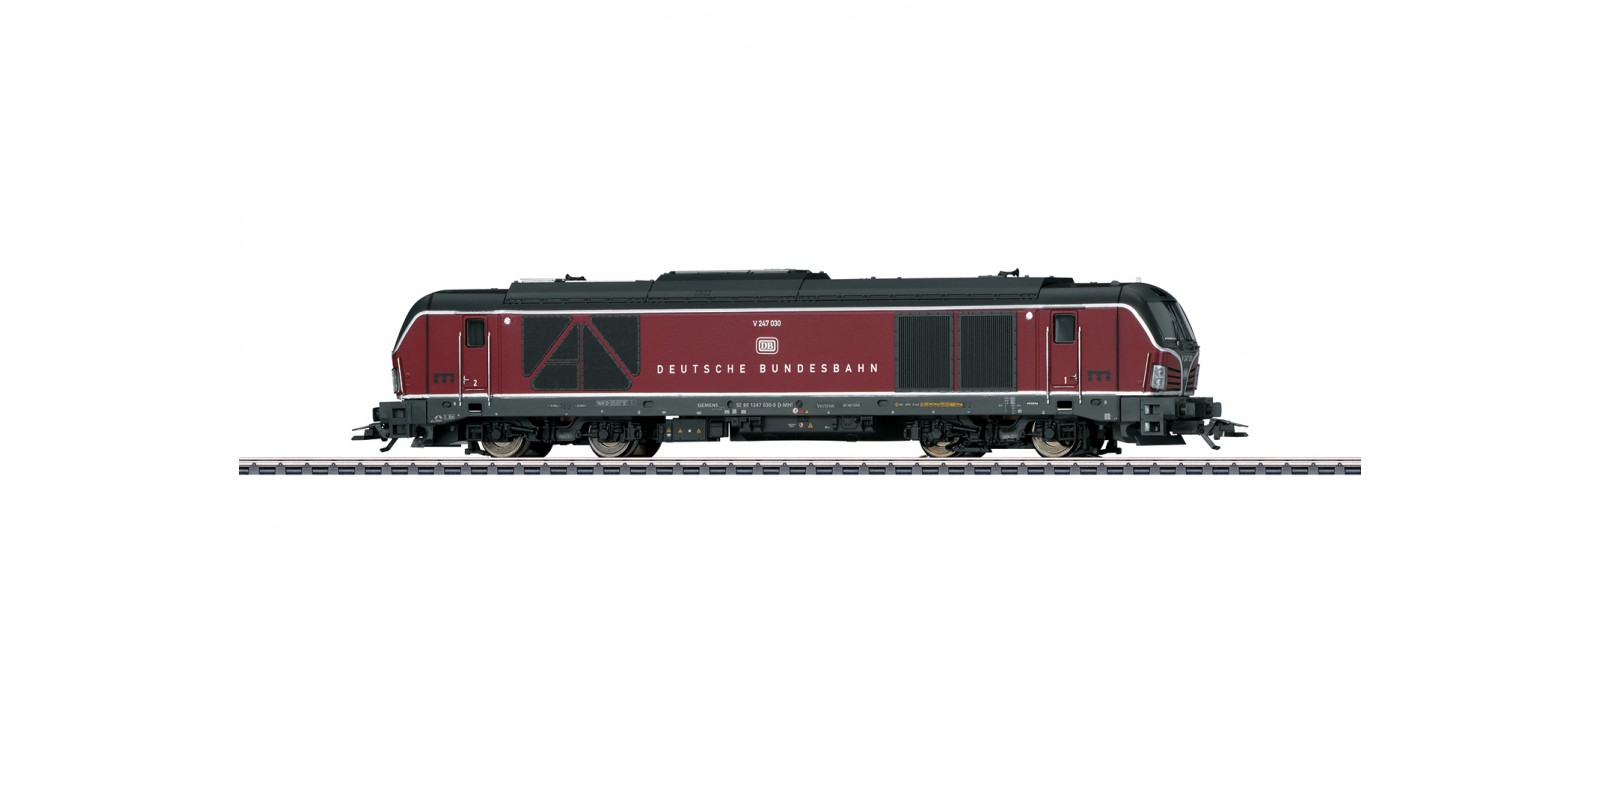 36292 Class 247 Diesel Locomotive